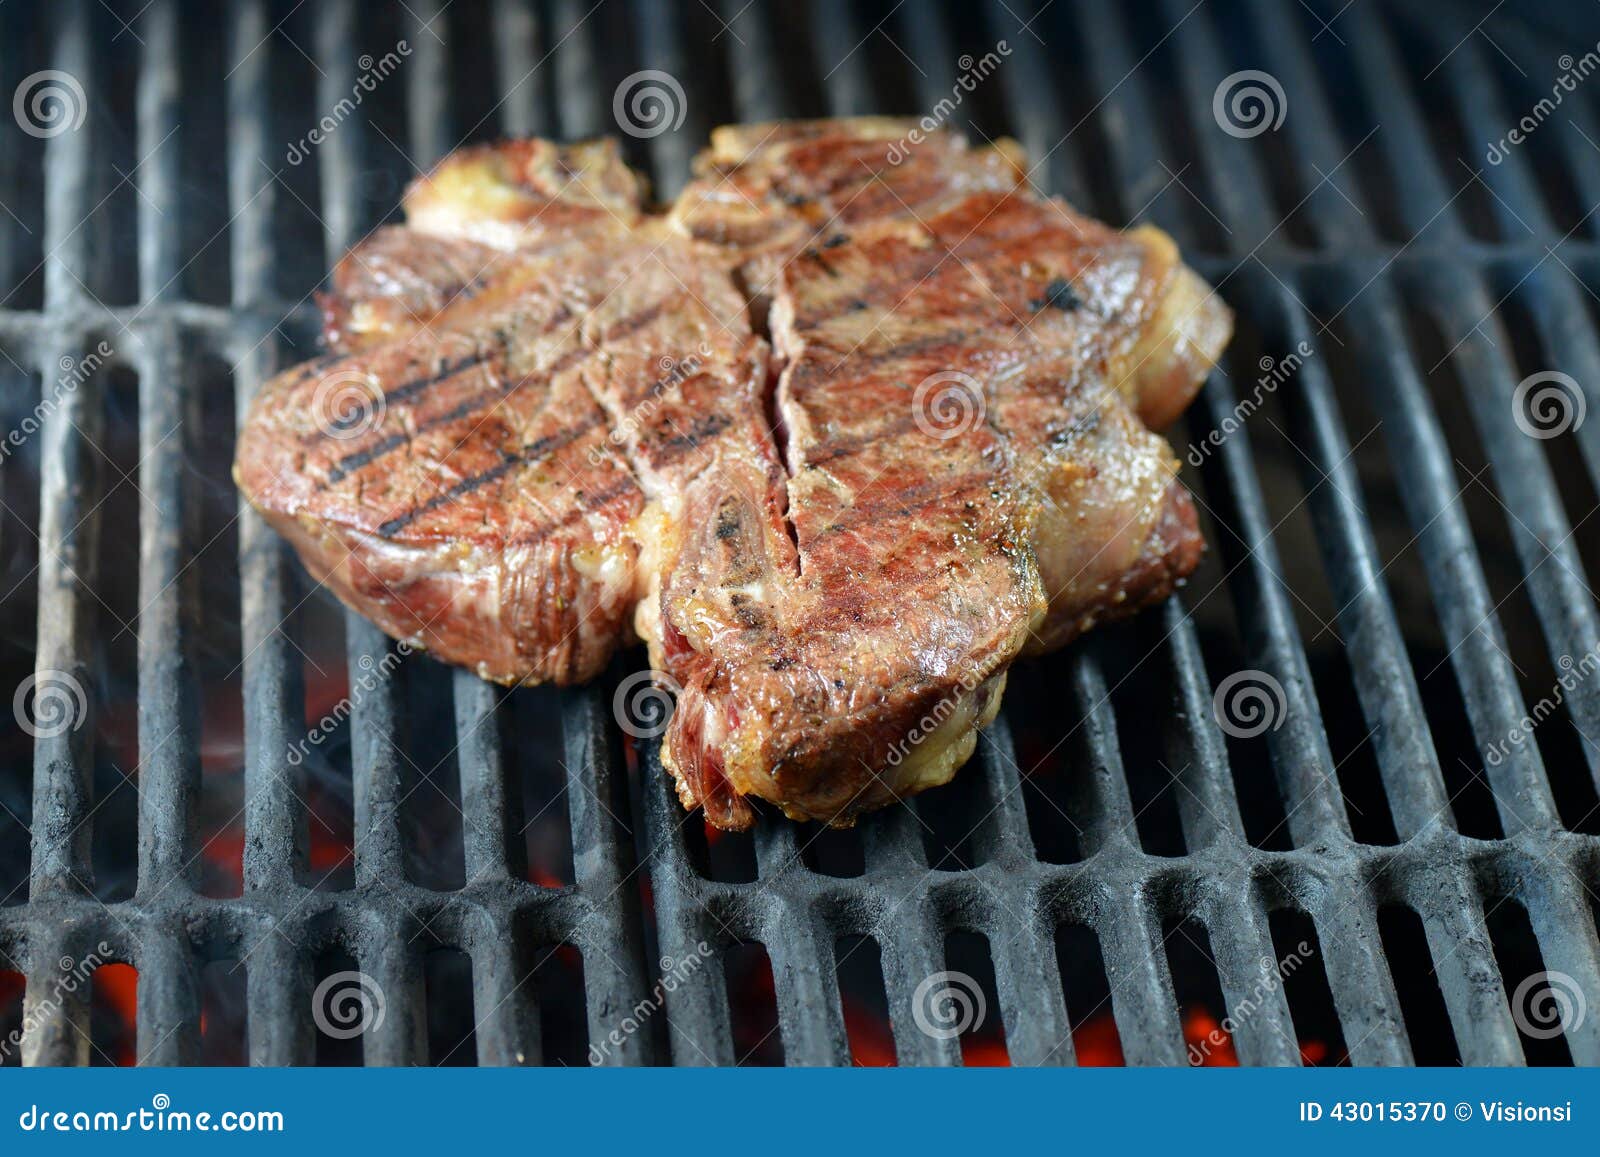 beef steak grilled on a bbq, florentine t-bone